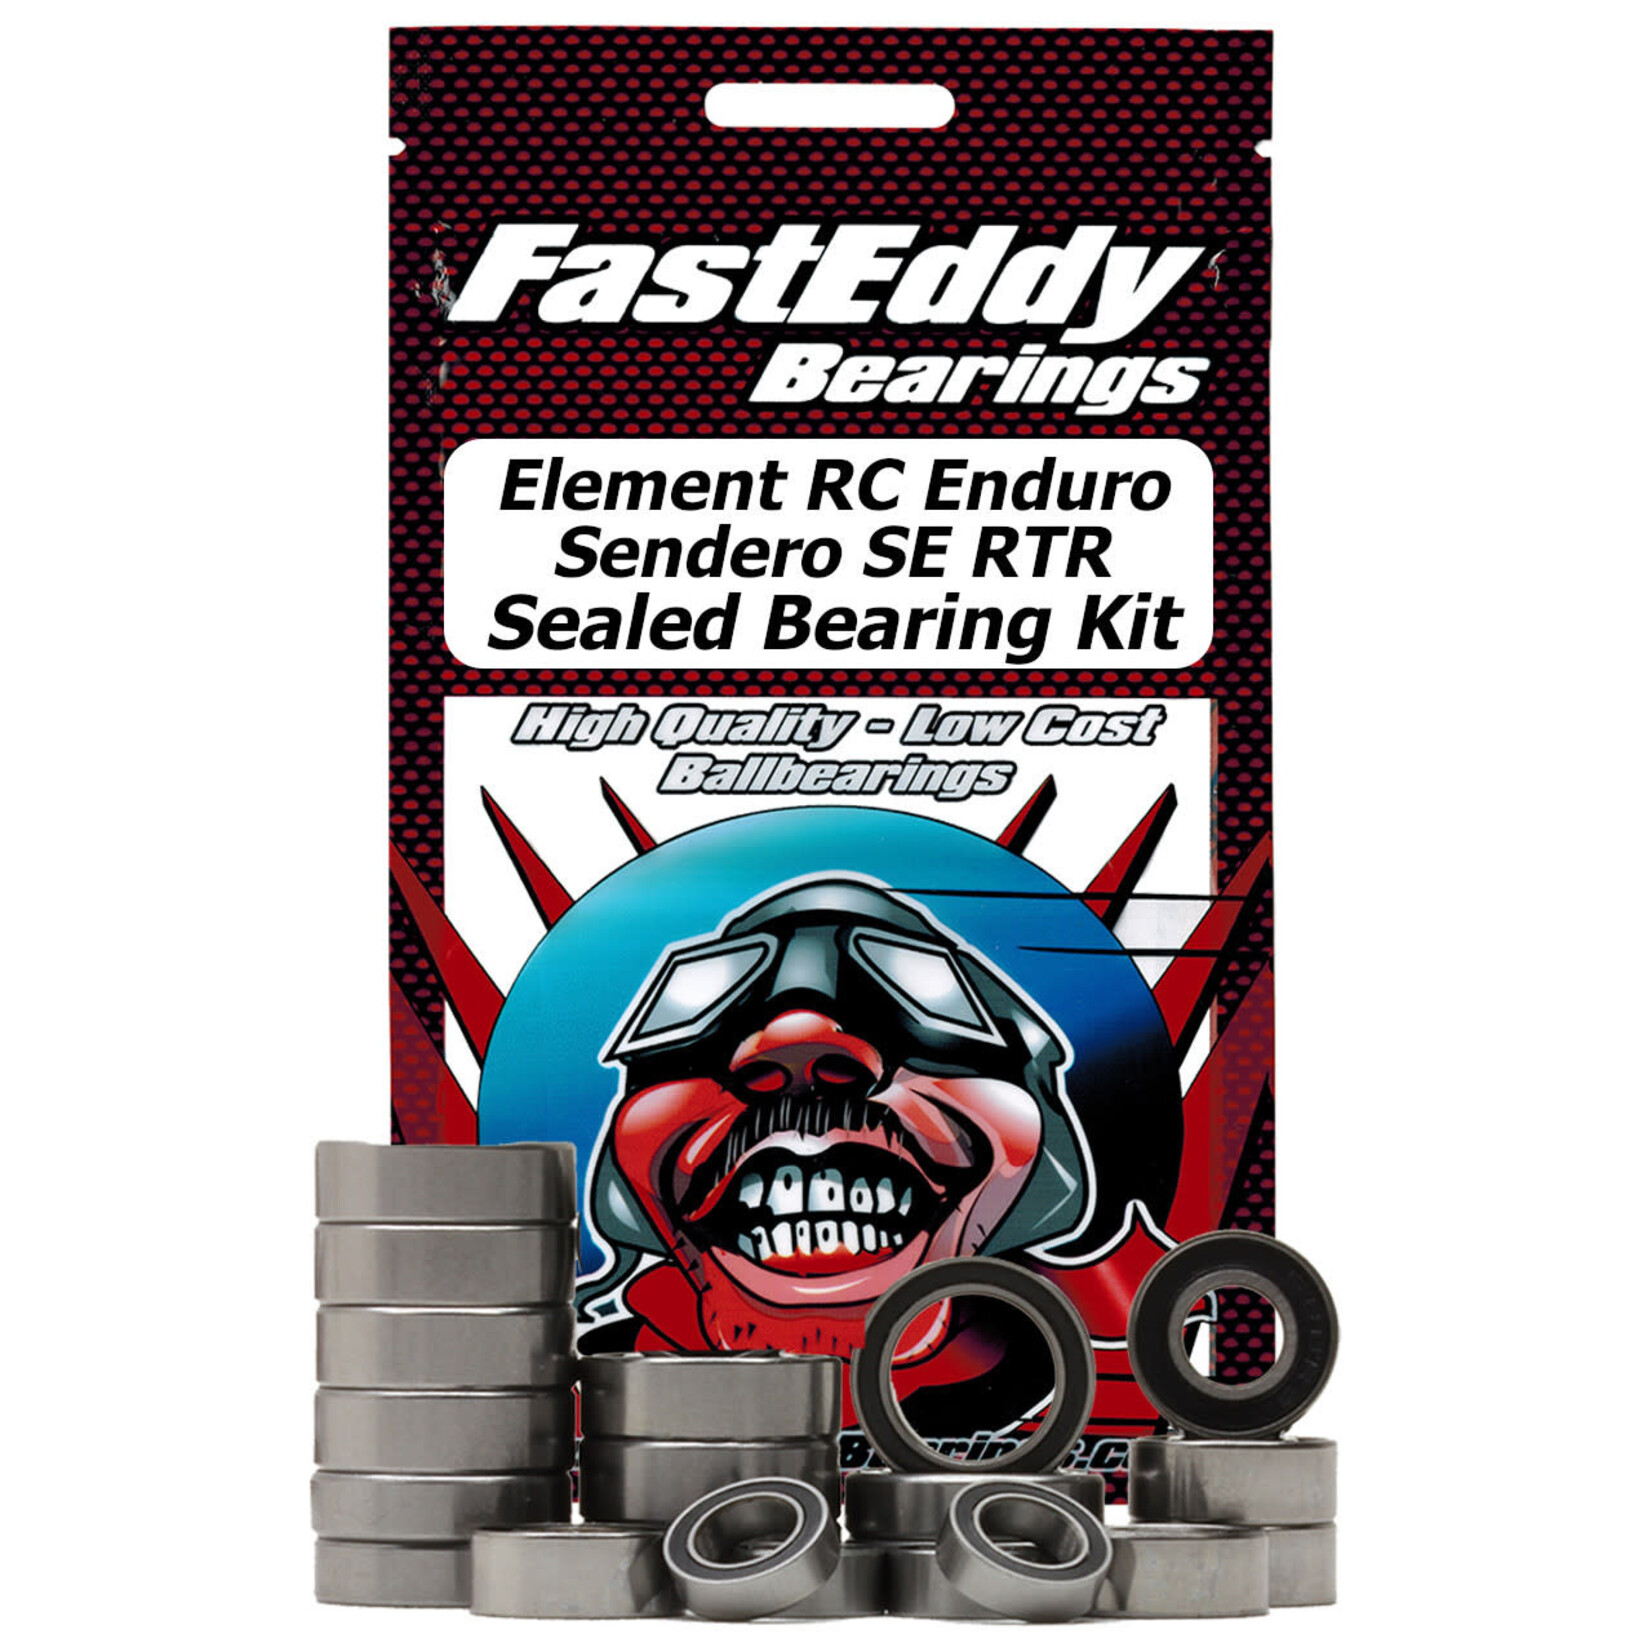 FastEddy FastEddy Bearings Element RC Enduro Sendero SE RTR Sealed Bearing Kit #TFE8188